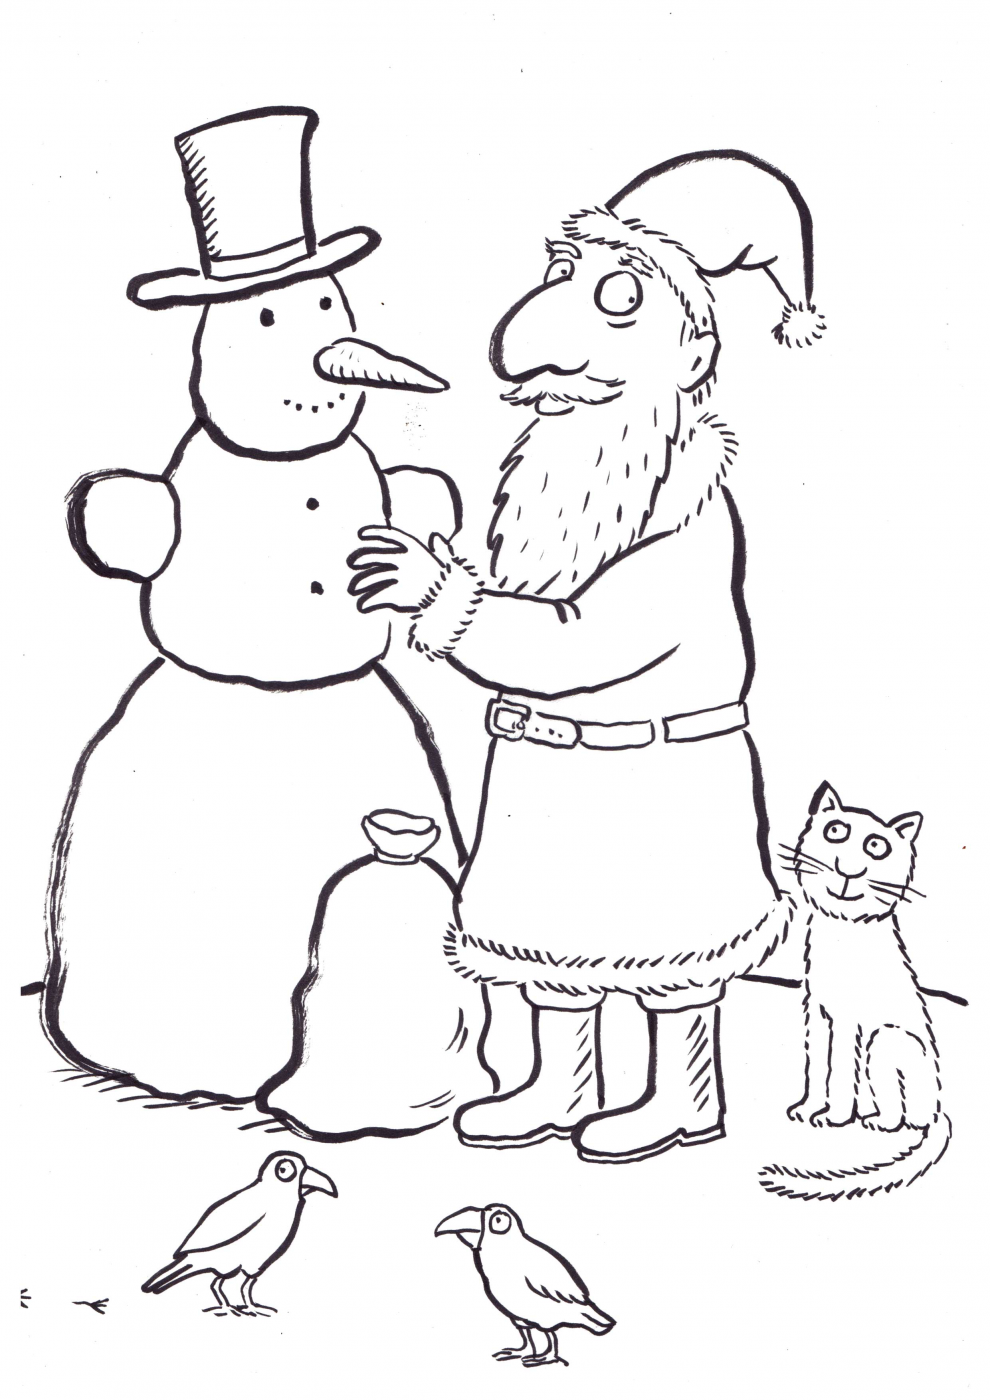 Snowman, Santa and cat illustration